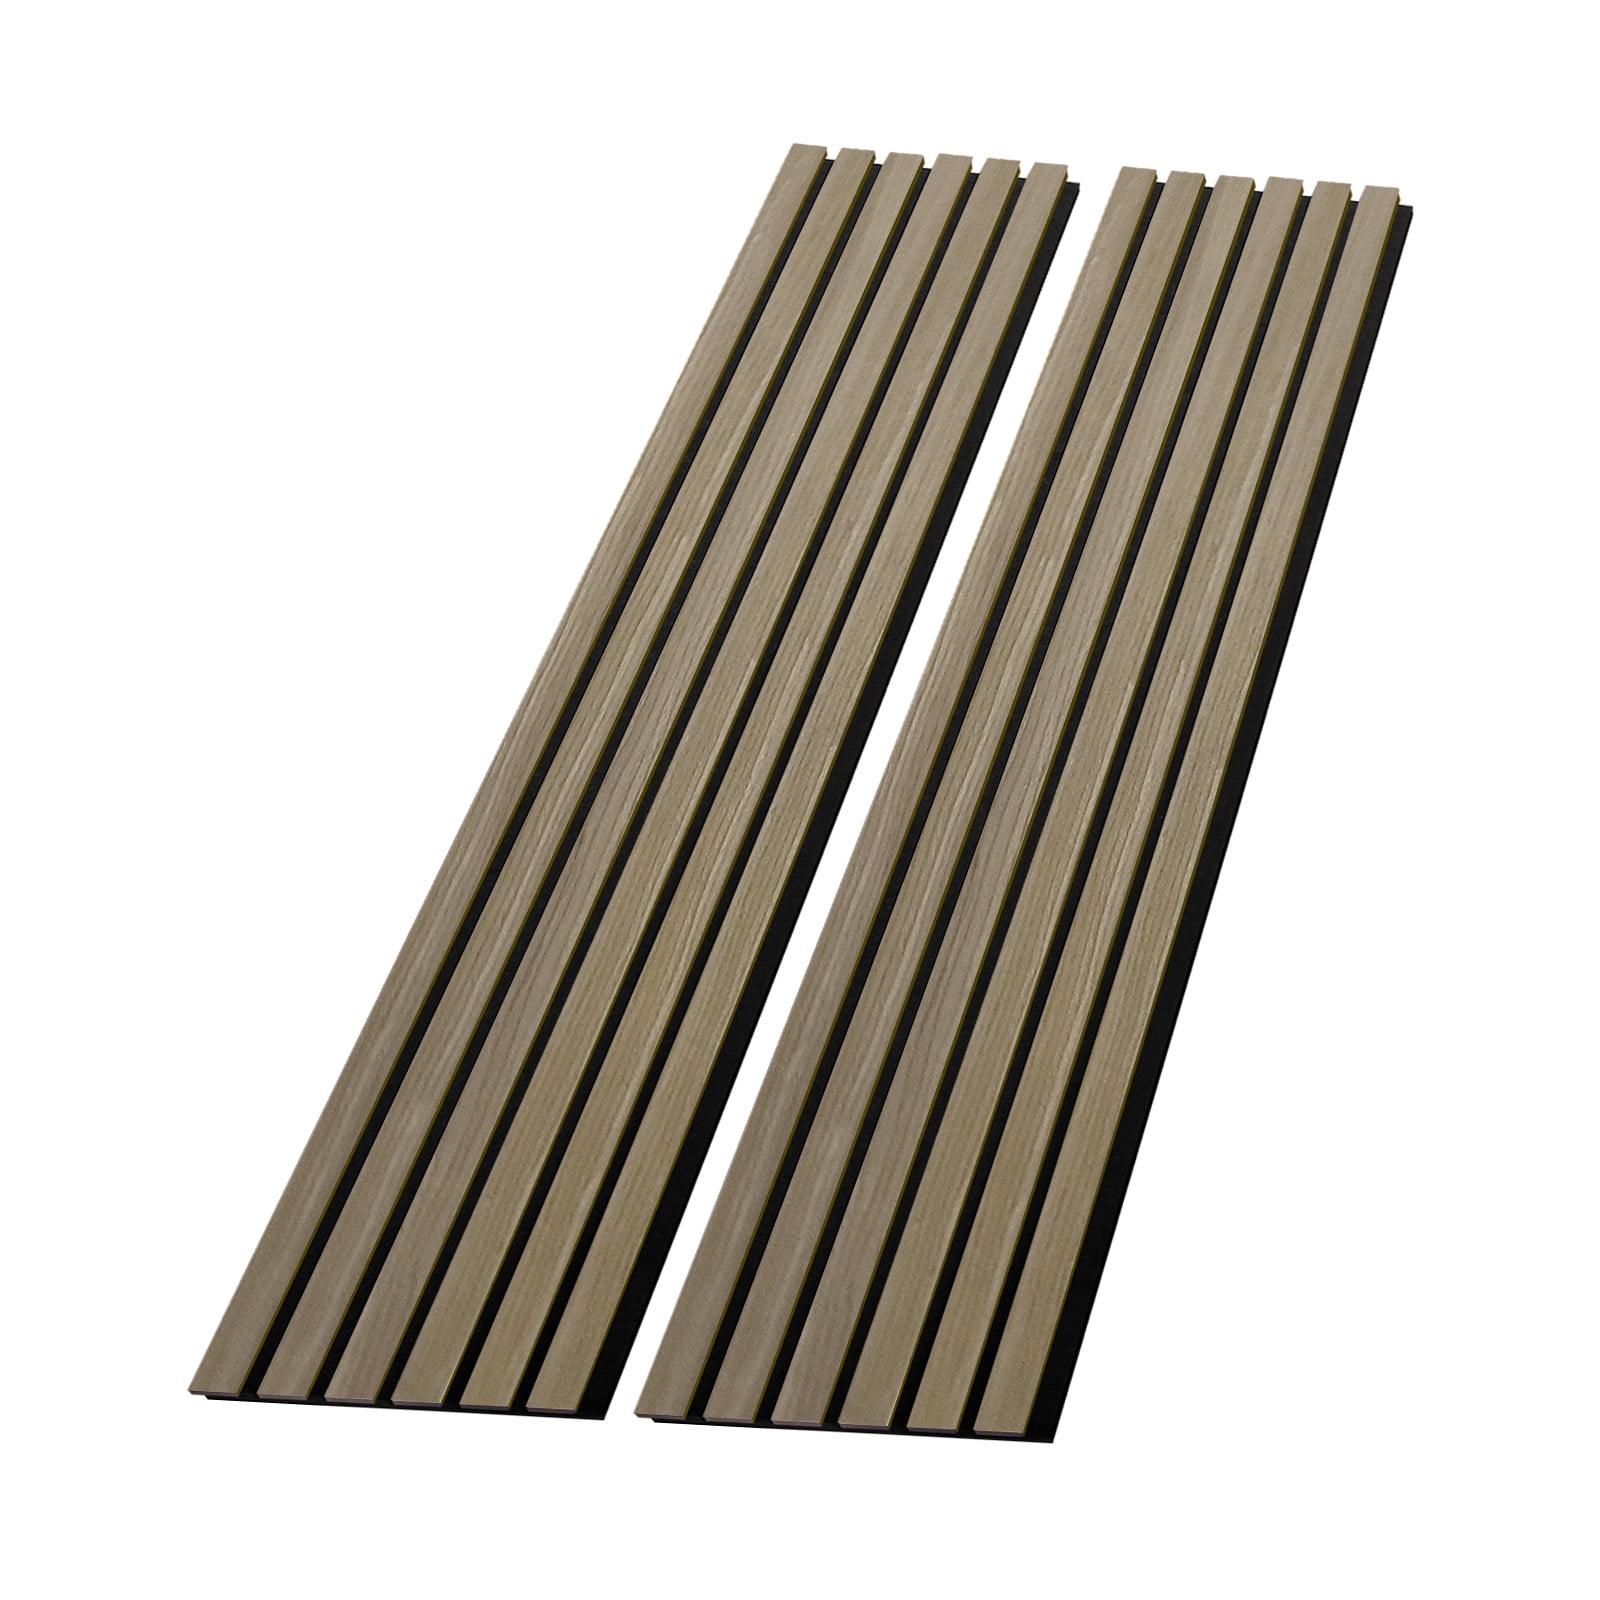 Acoustic Slat Wood Wall Panels  Luxury Noise-Reducing Wall Paneling